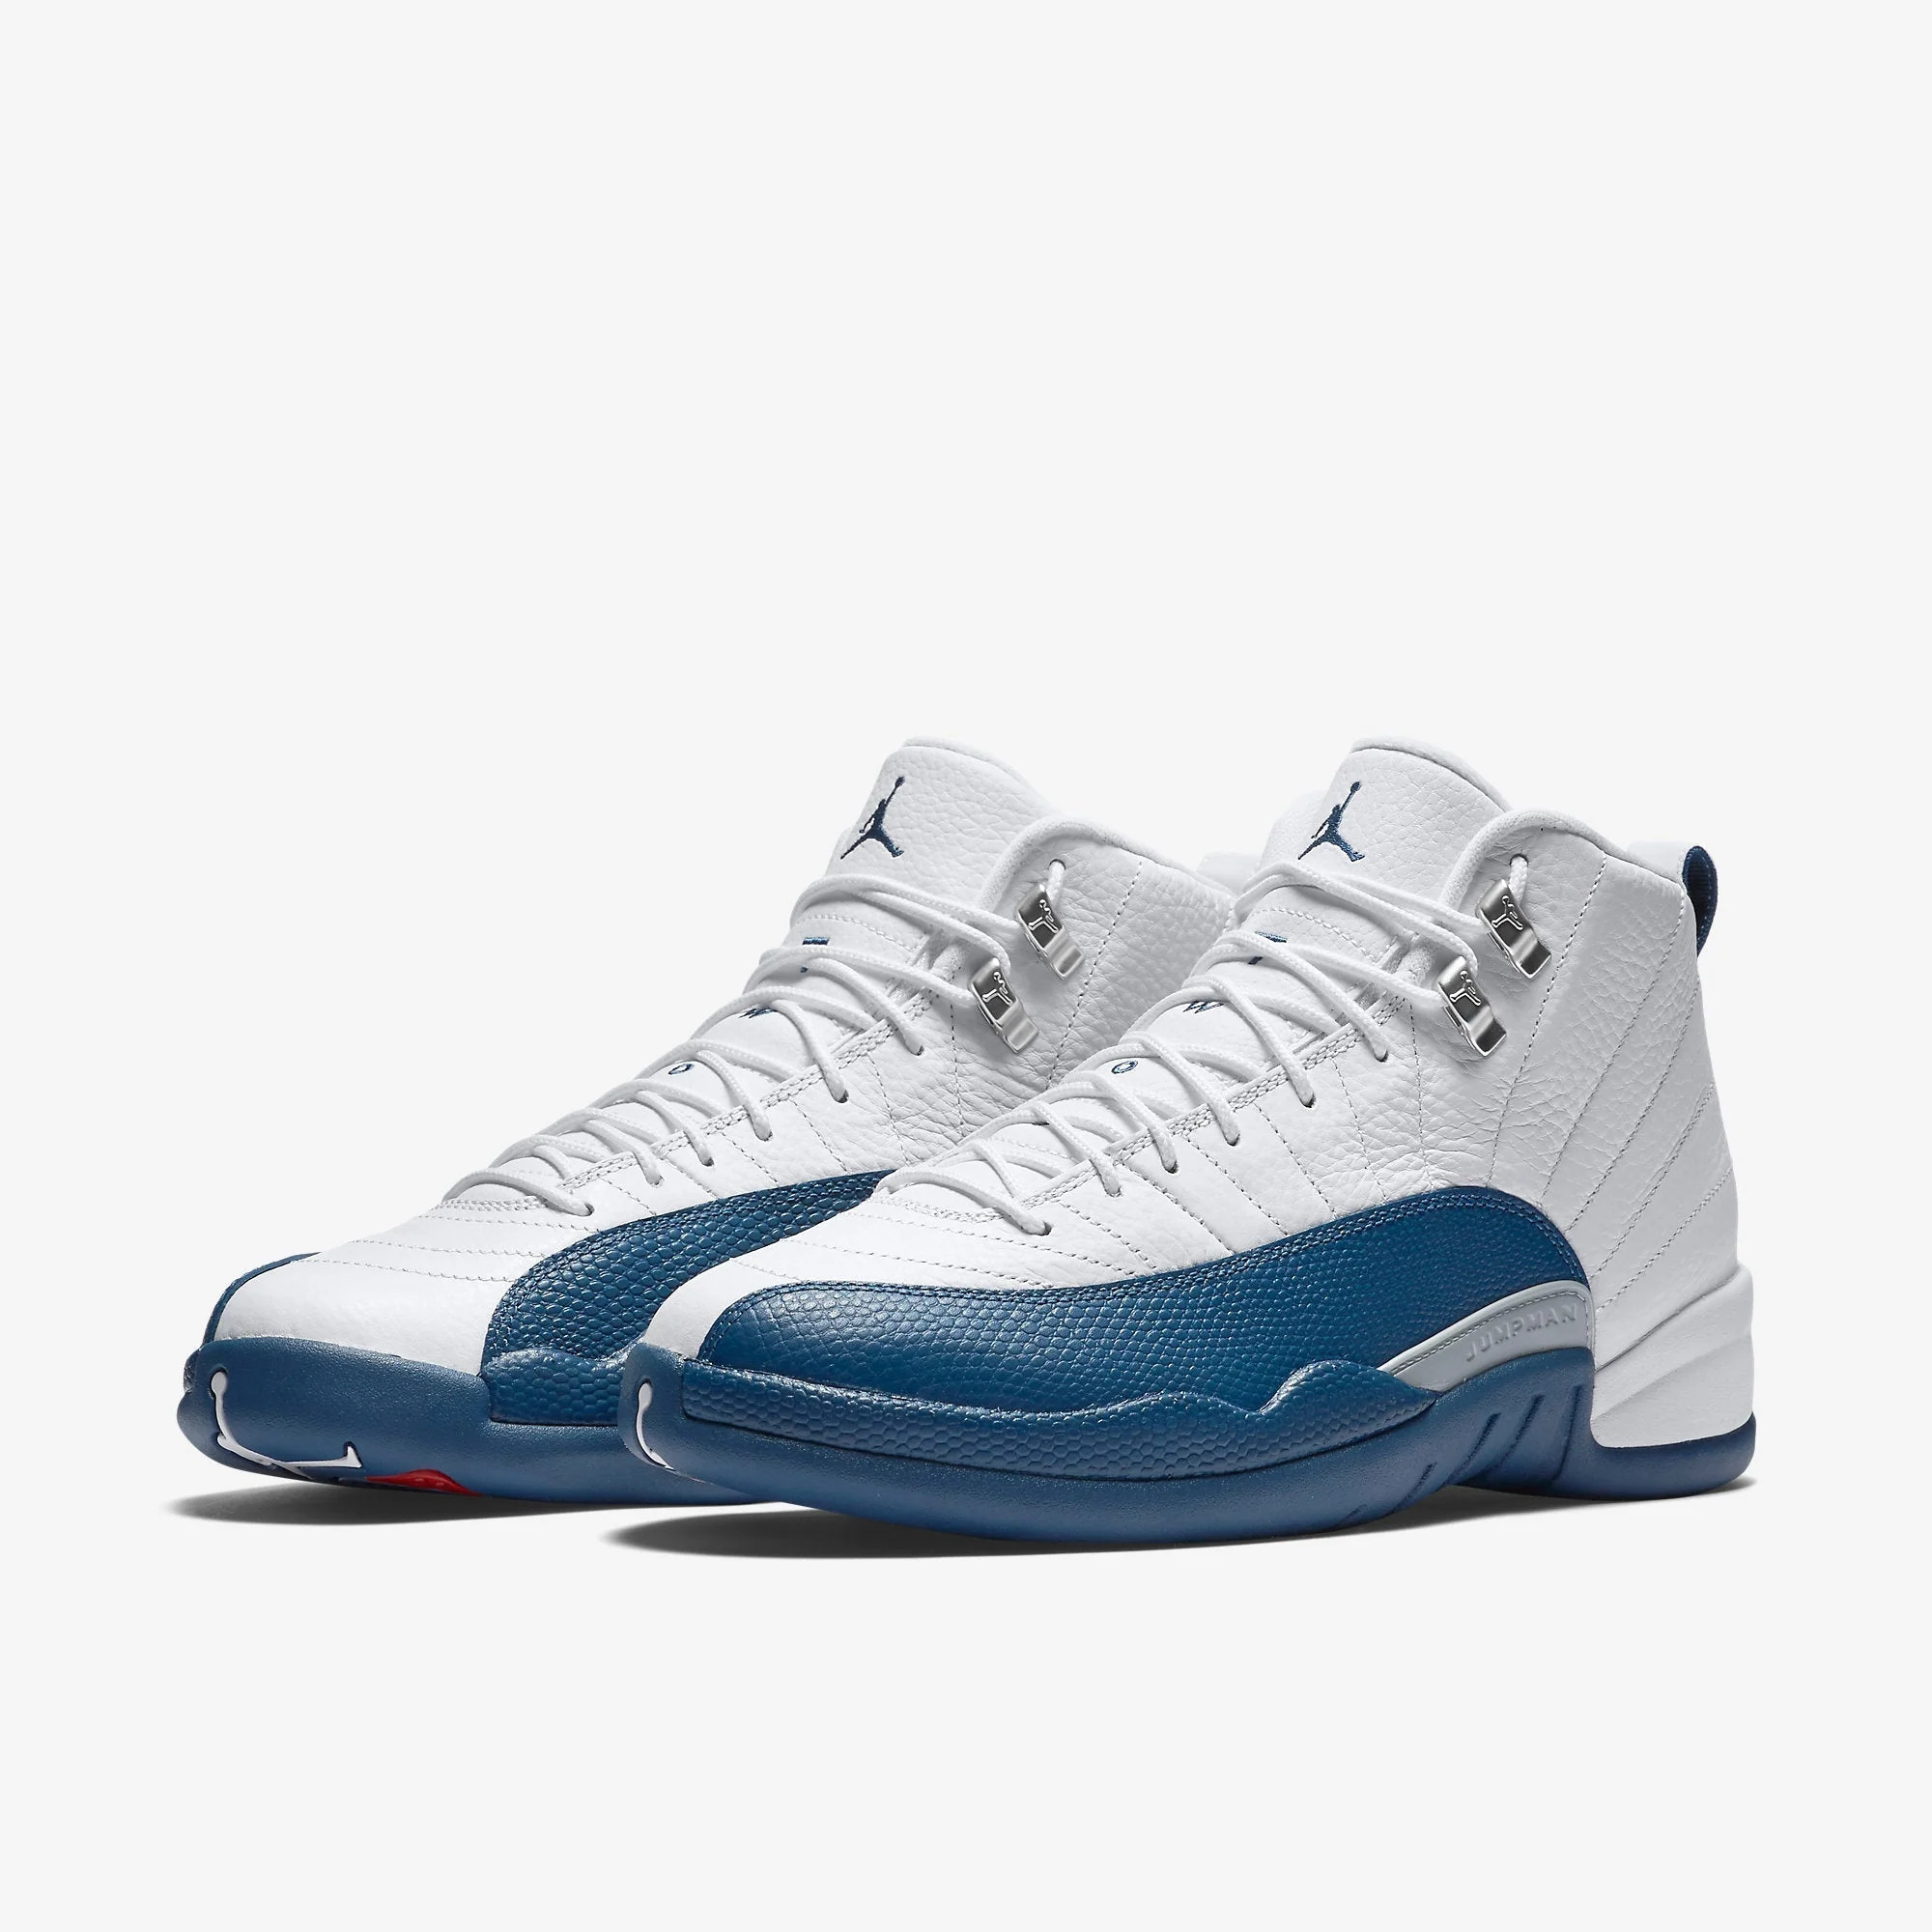 Nike Mens Air Jordan 12 Retro "French Blue" White/Metallic Silver 130690-113 - image 3 of 6